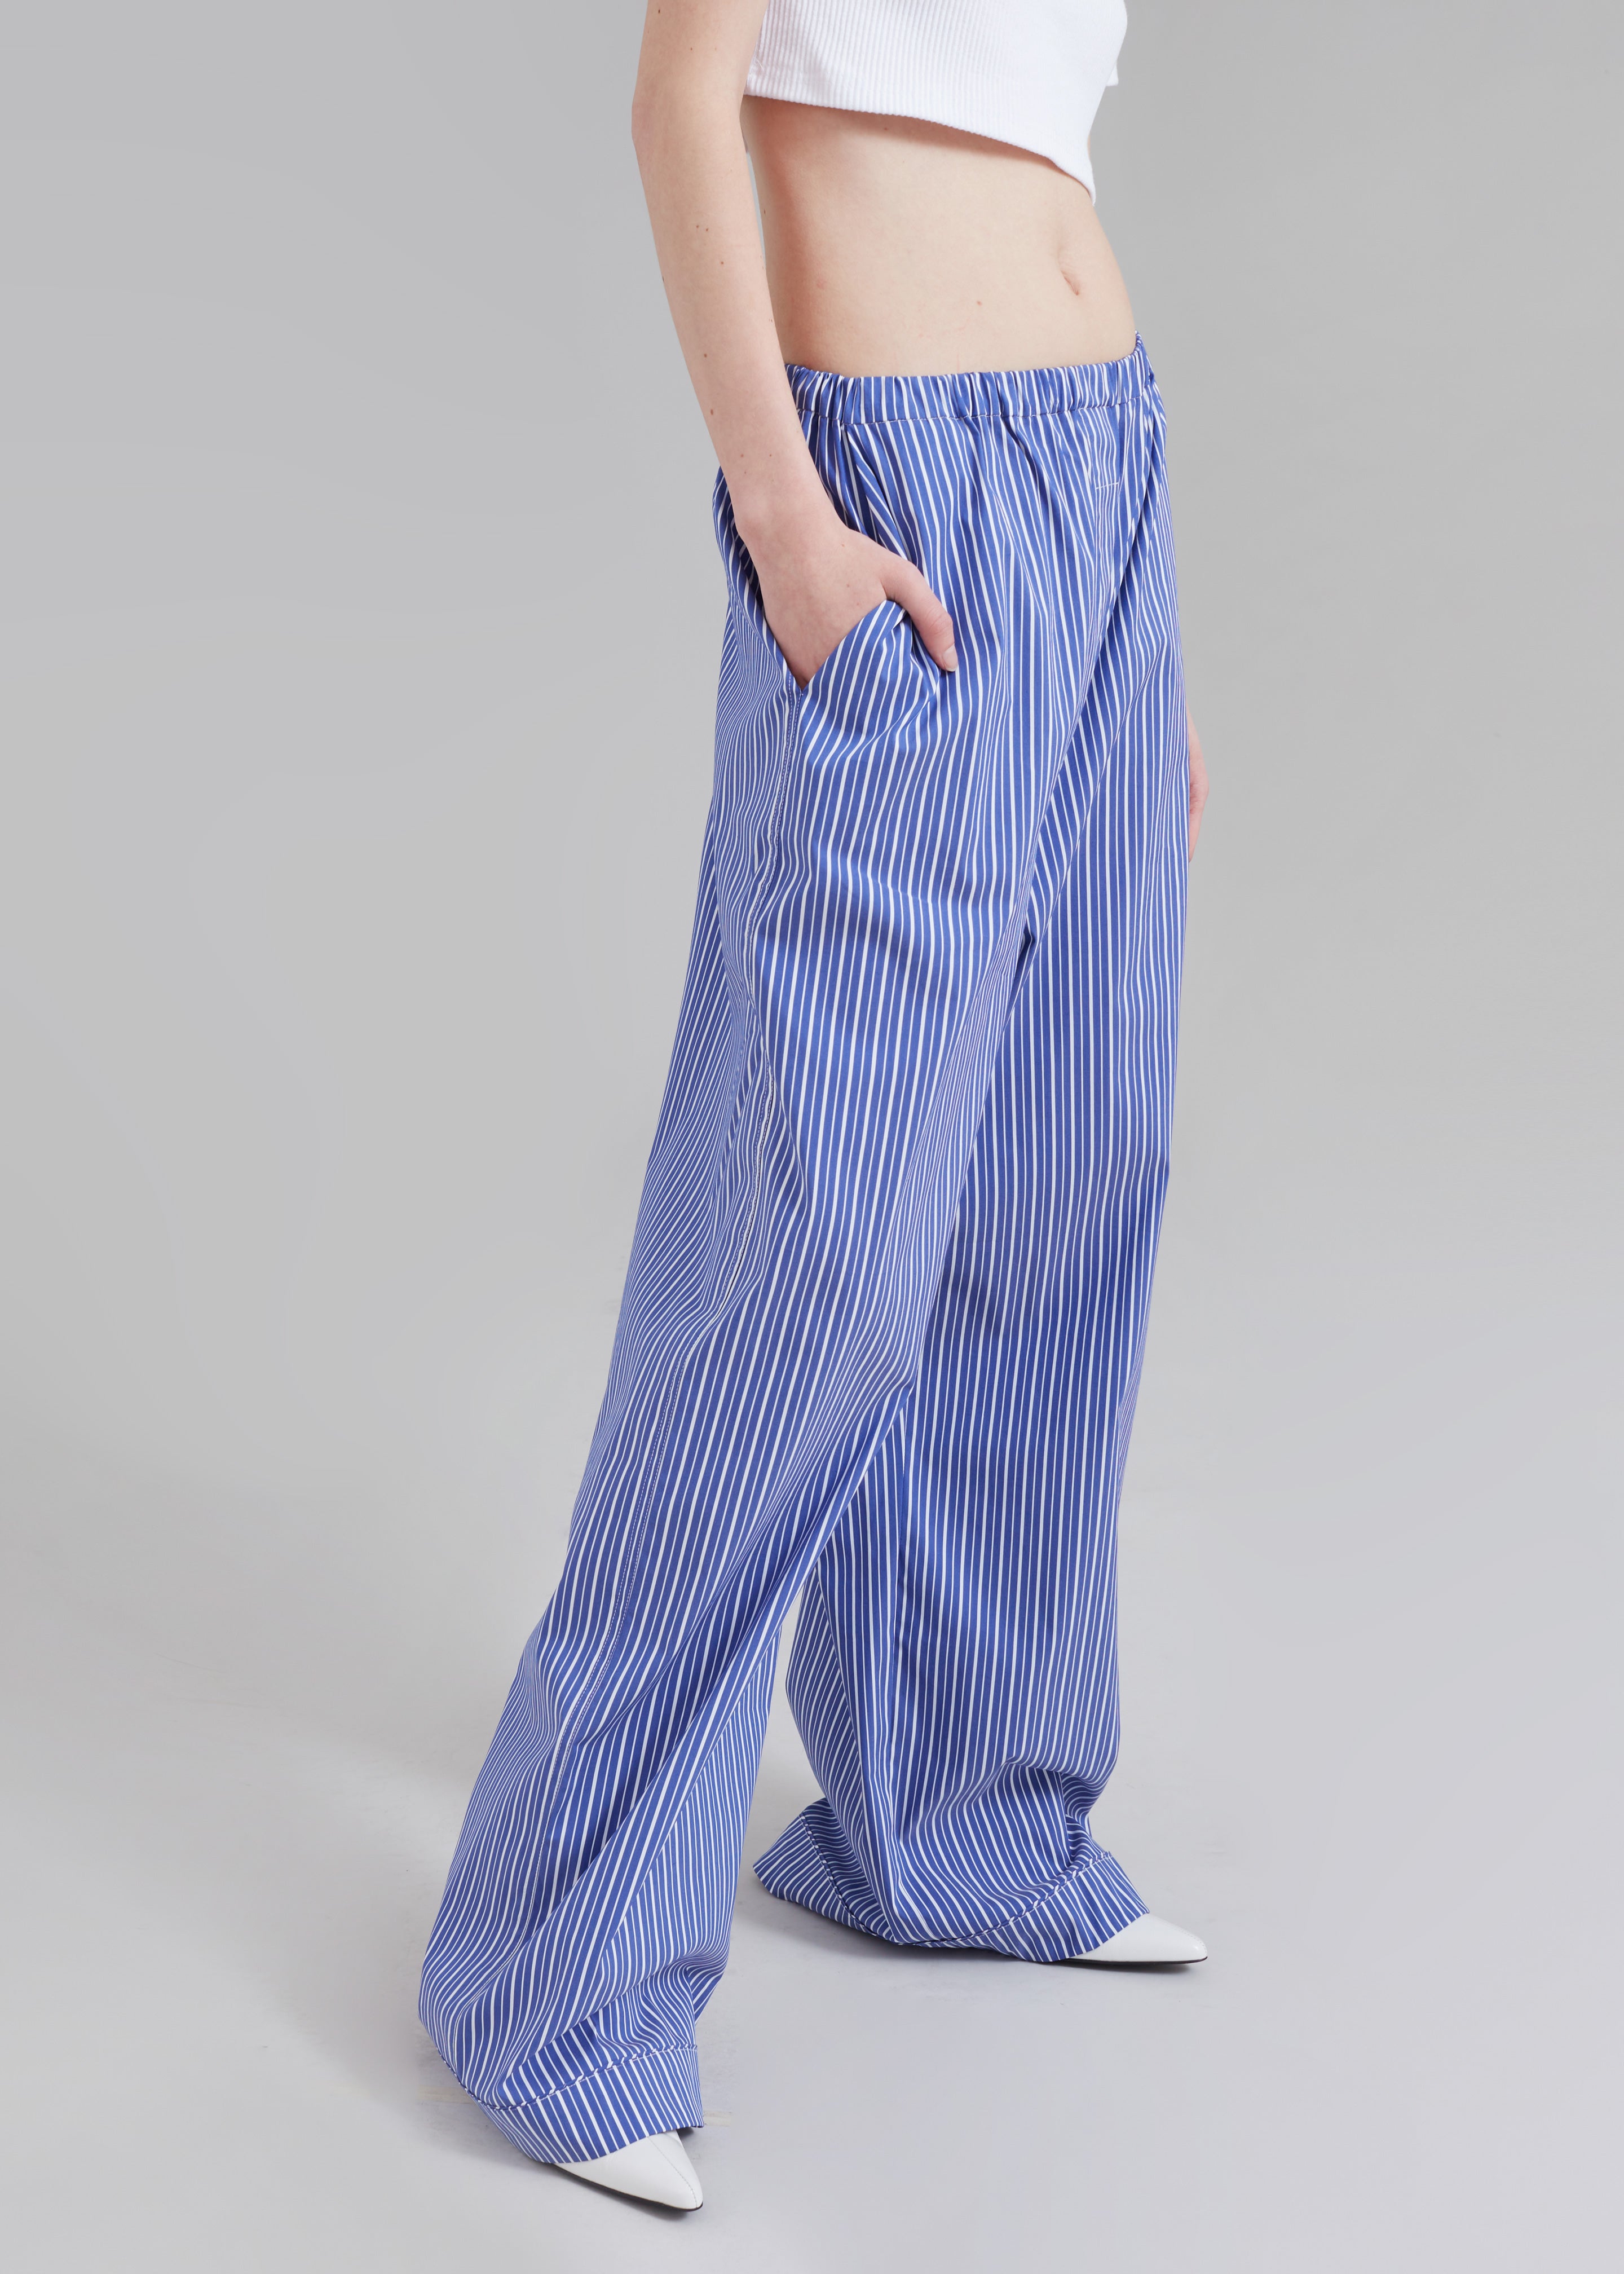 Mirca Elastic Pants - Blue Multi Stripe - 3